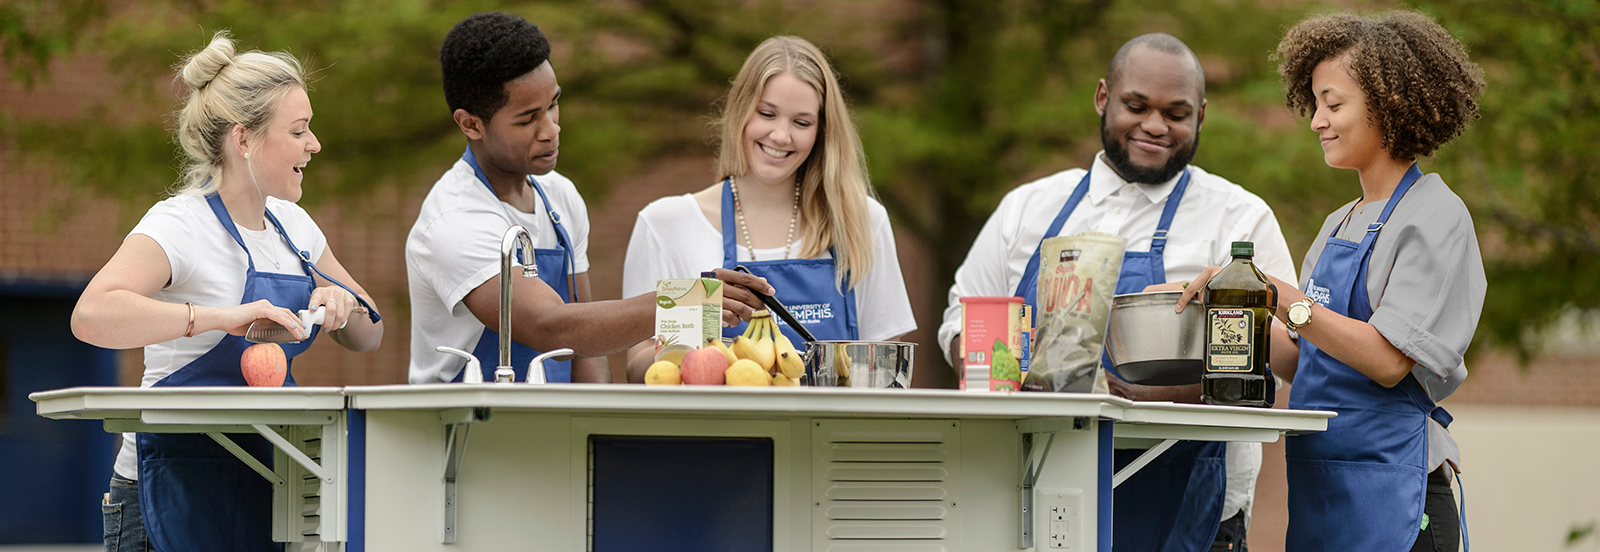 students preparing food at outdoor health kitchen